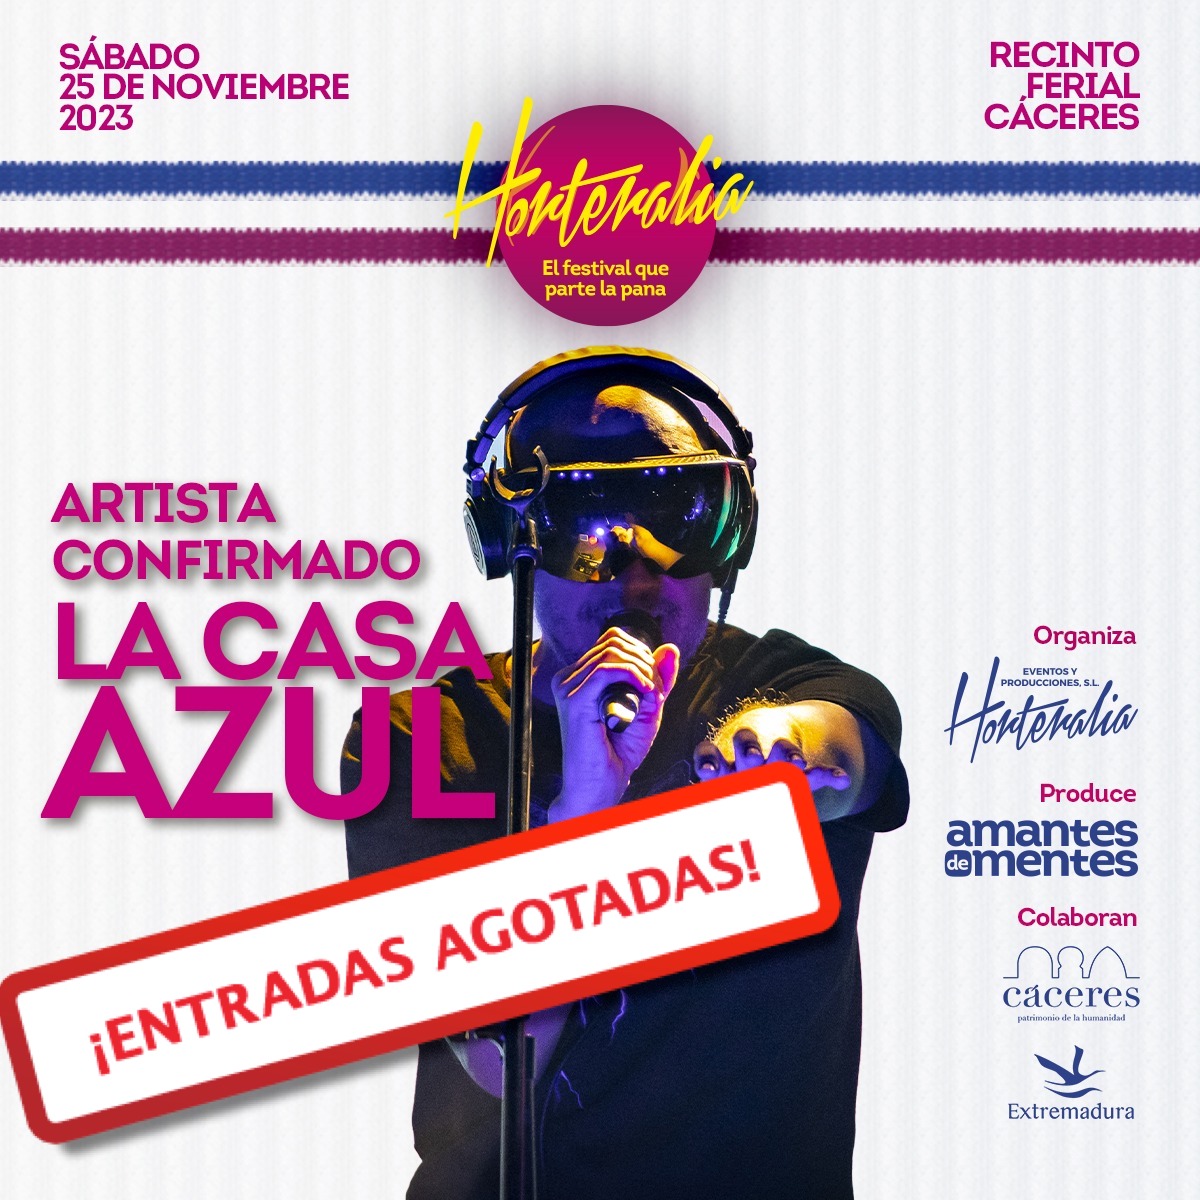 Sábado 25 de Noviembre en CÁCERES #Concierto 21:30h Festival @Horteralia Recinto Ferial #SoldOut #LaCasaAzul